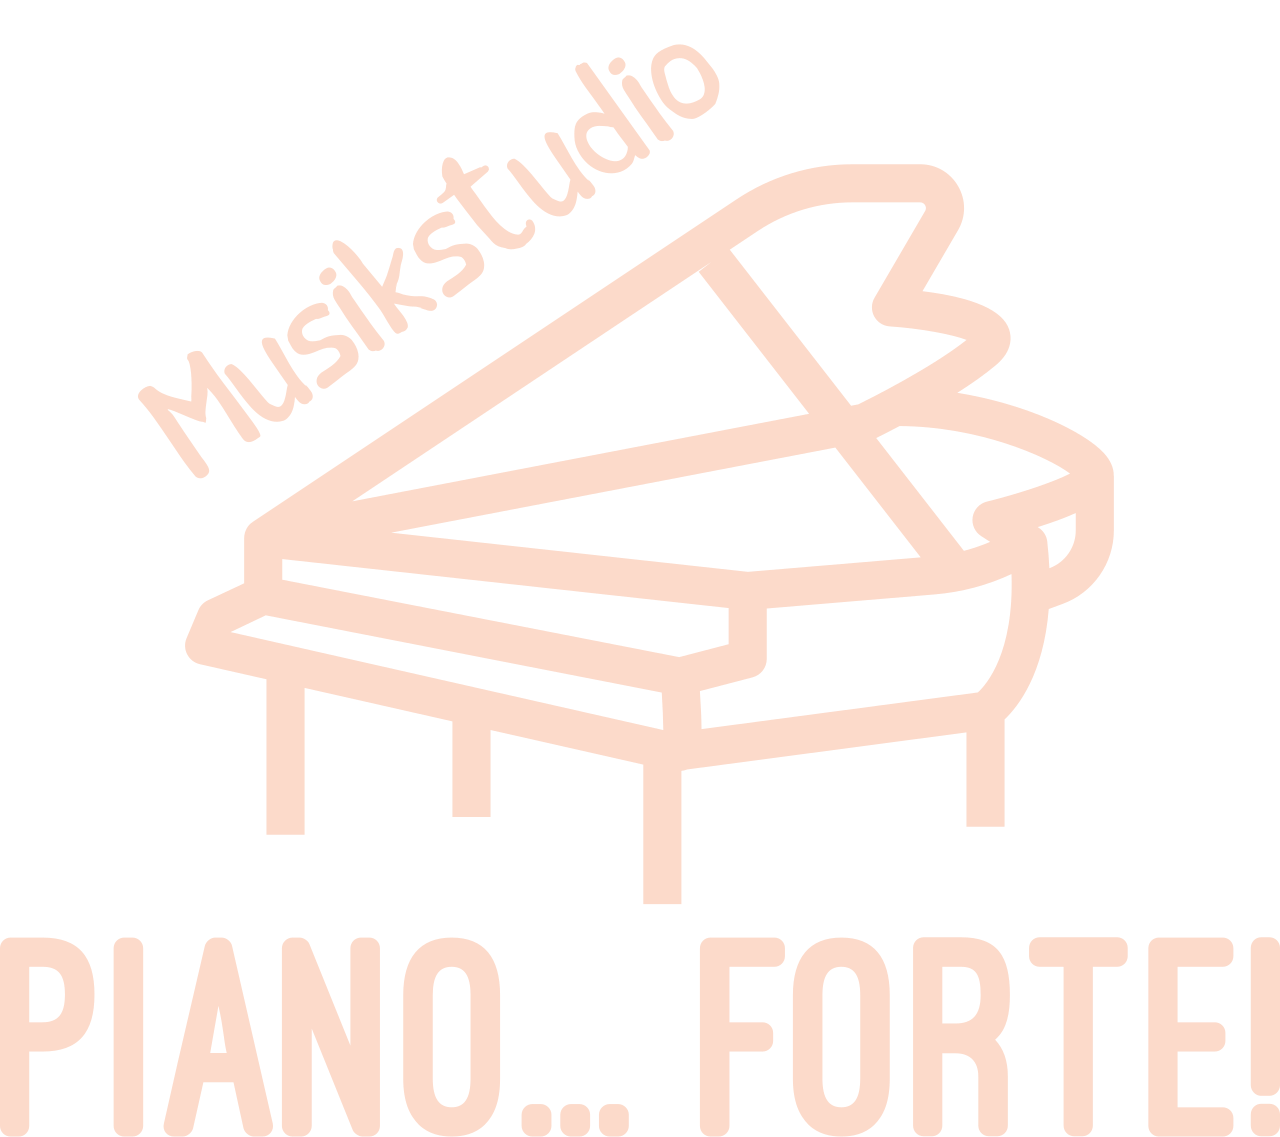 Piano... Forte! 's web page